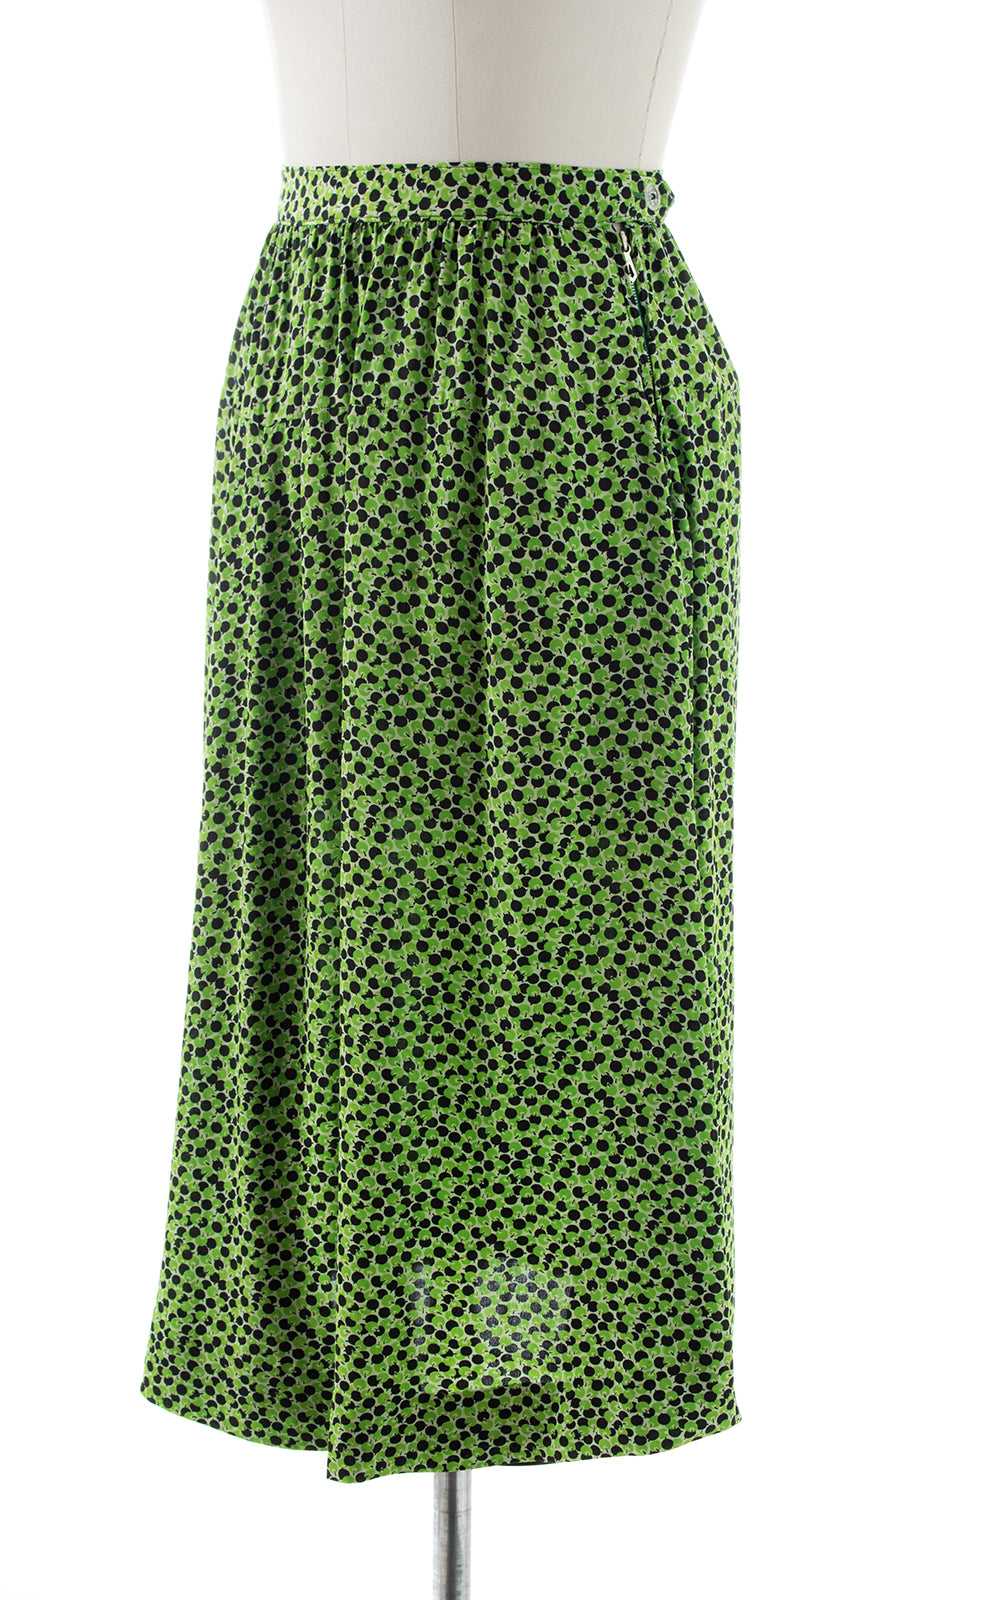 1940s Apples or Olives Novelty Print Rayon Skirt … - image 3